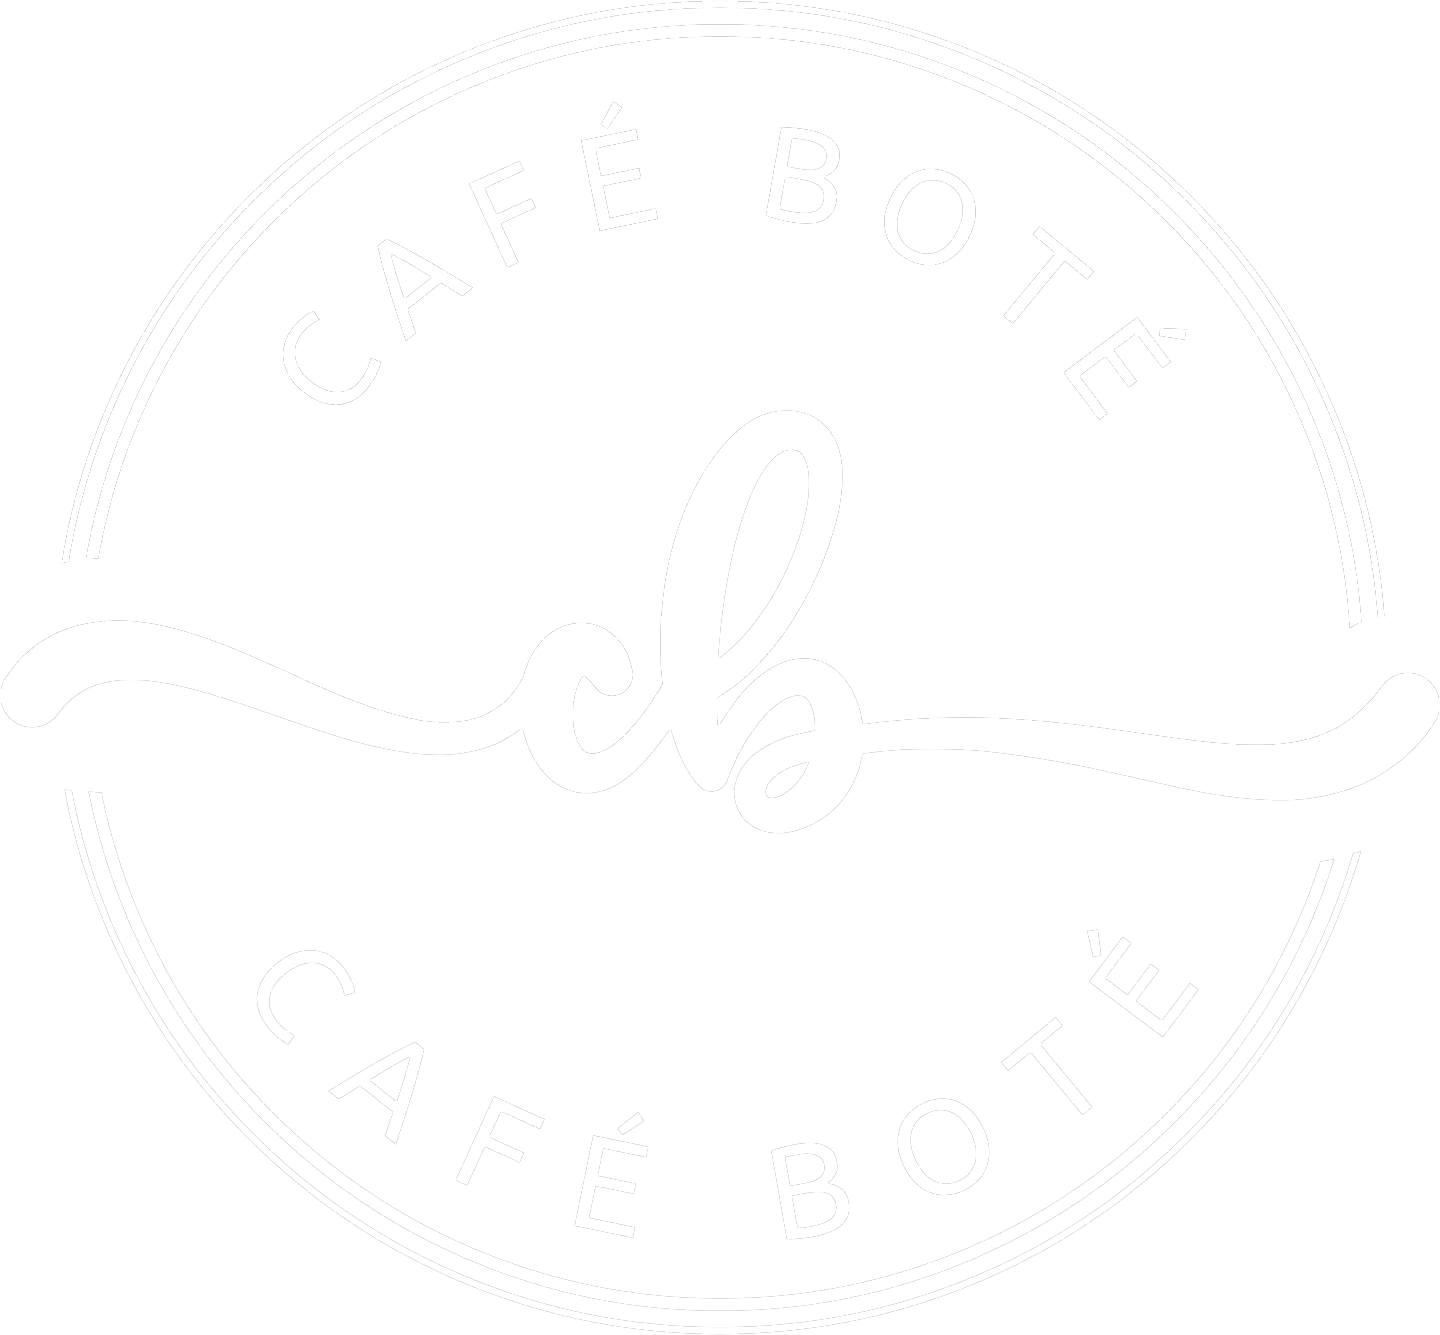 Cafe Bote